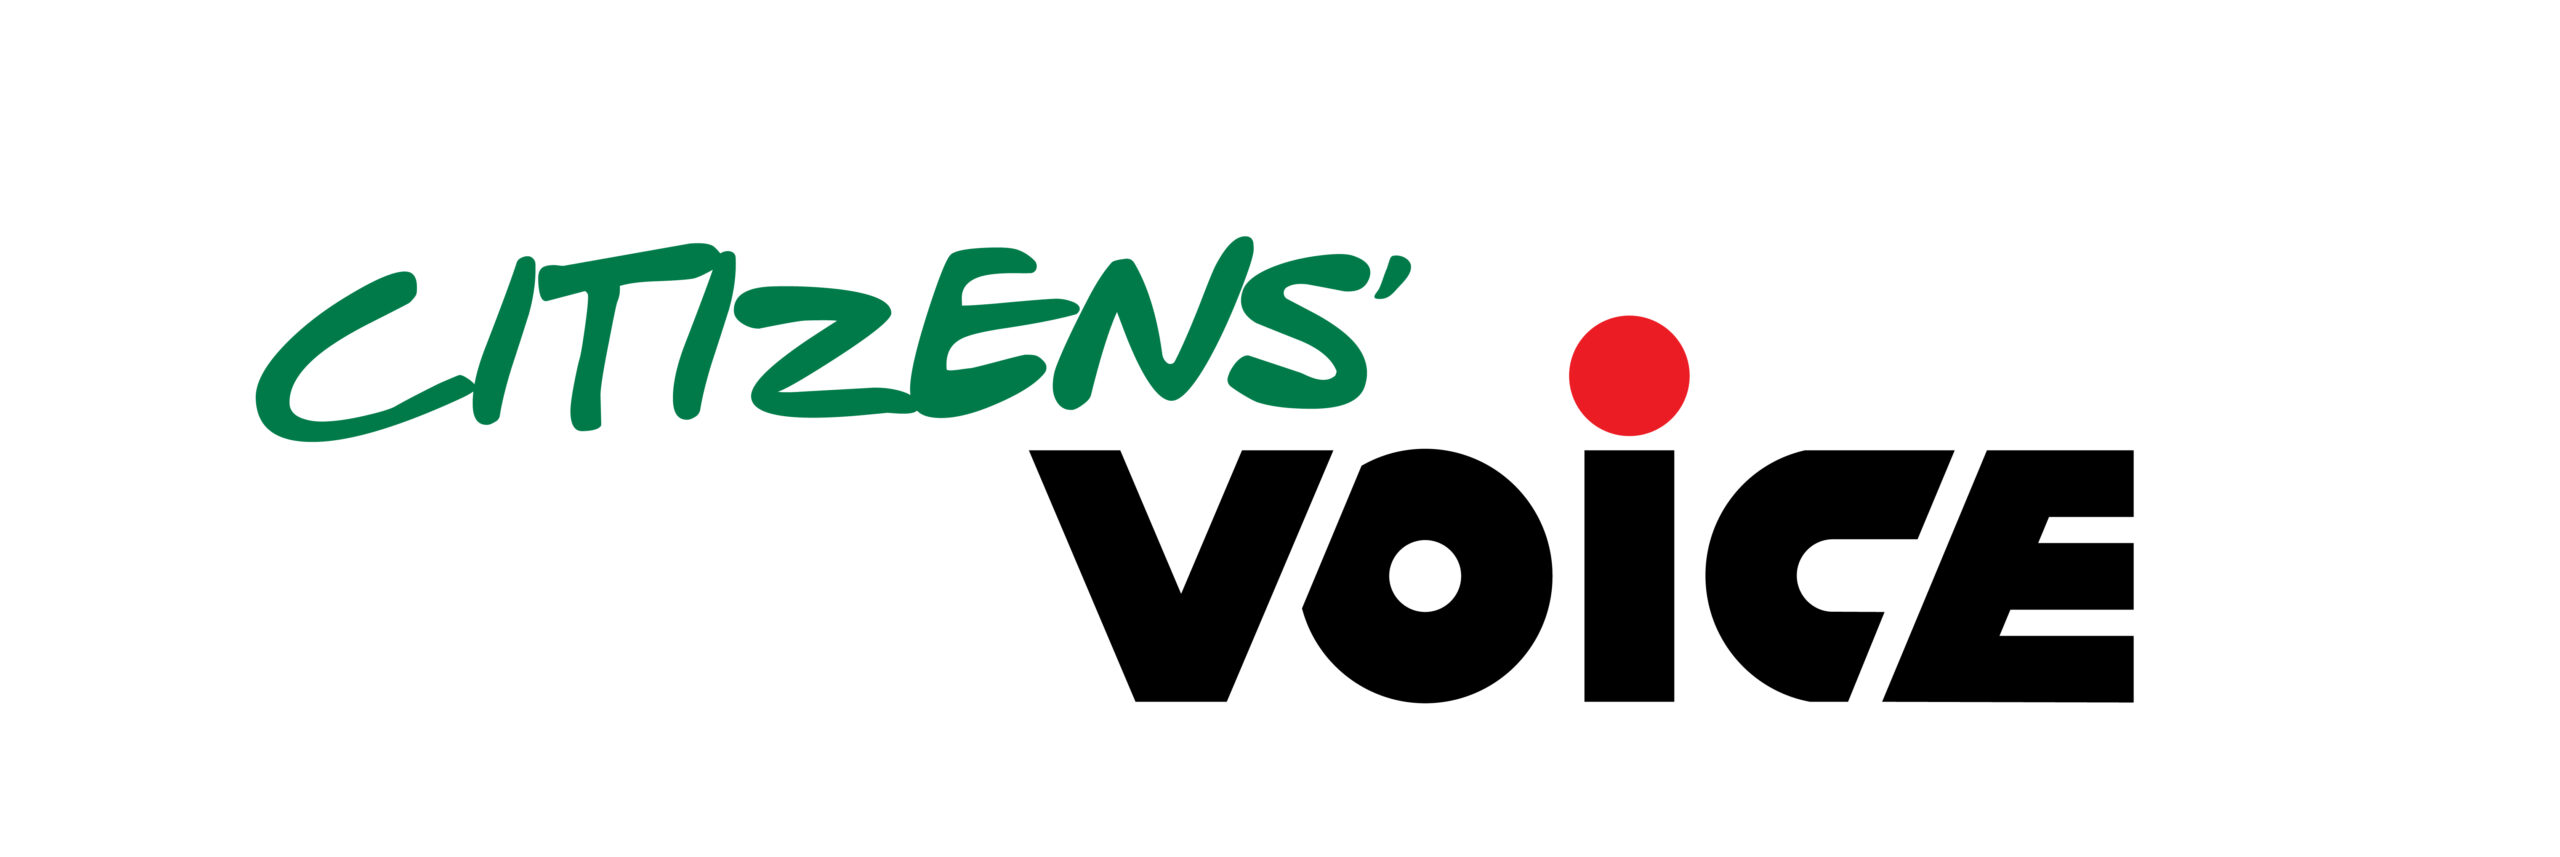 Final Logo Citizens Voice-01